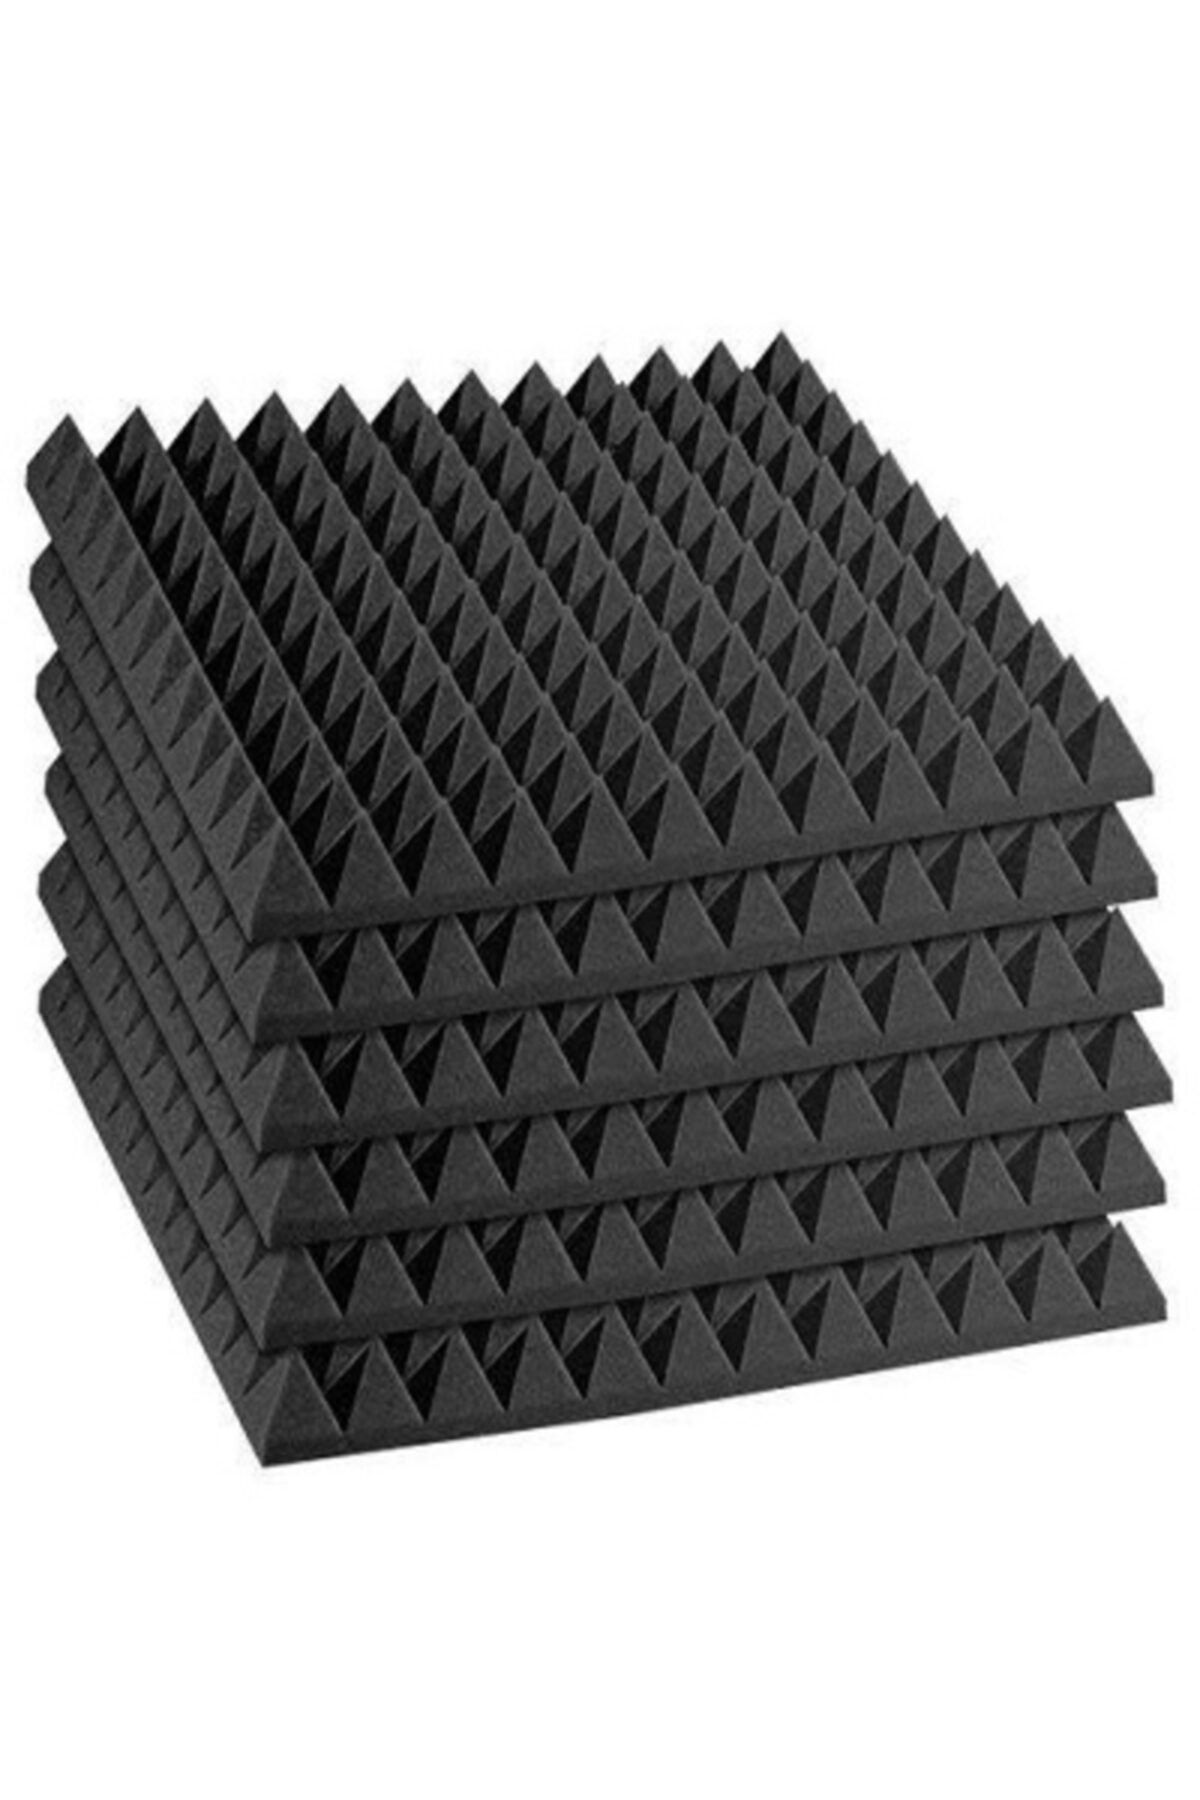 Eryapı Akustik Piramit Sünger 334 / Kalınlık 4cm Ebat 48x48